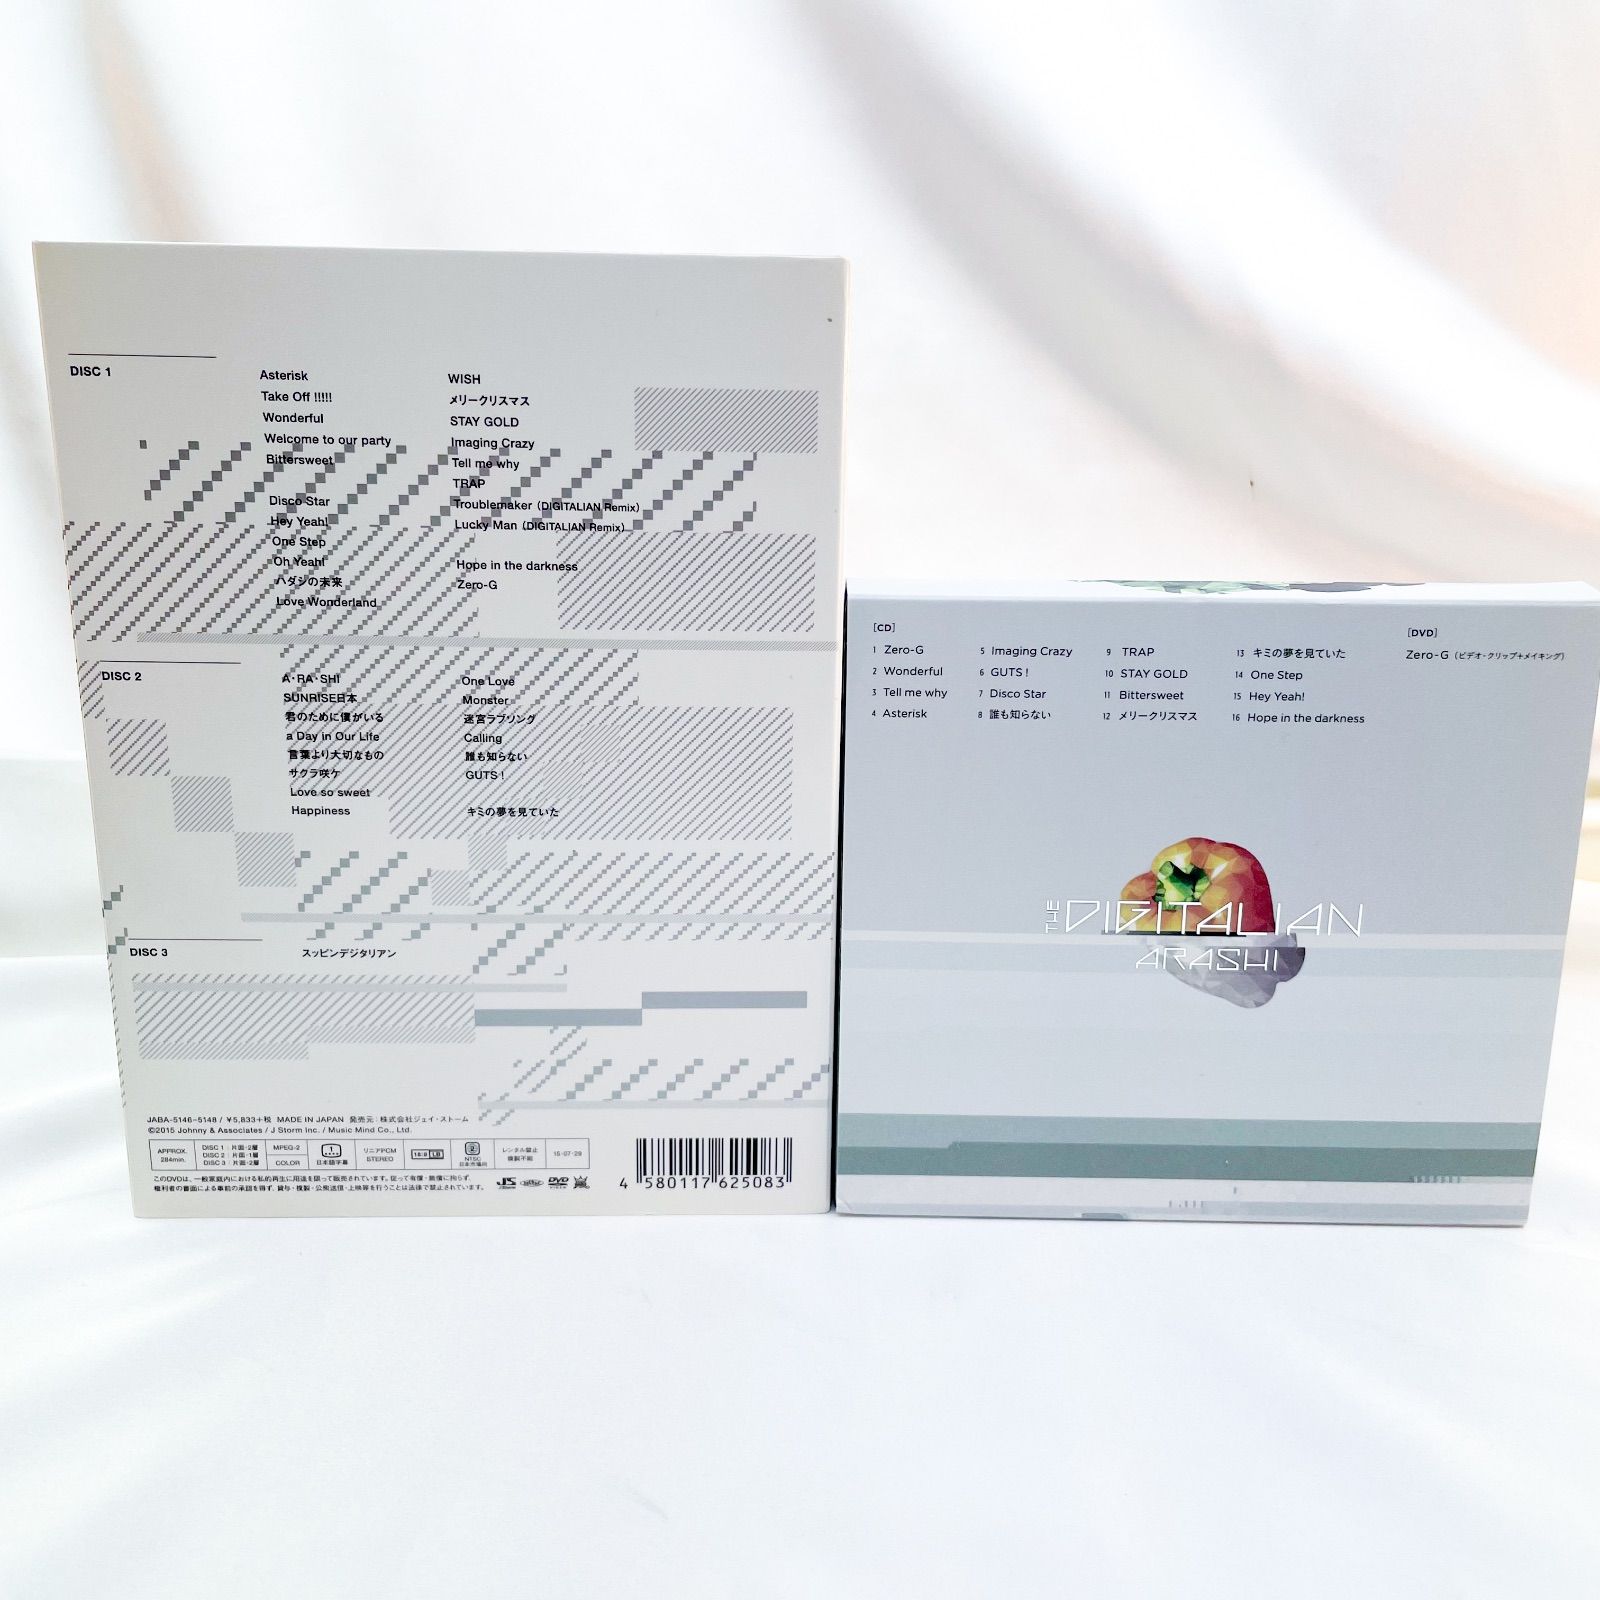 THE DIGITALIAN 初回限定盤 DVD 初回盤 CD セット (D) - ジャニーズ ...